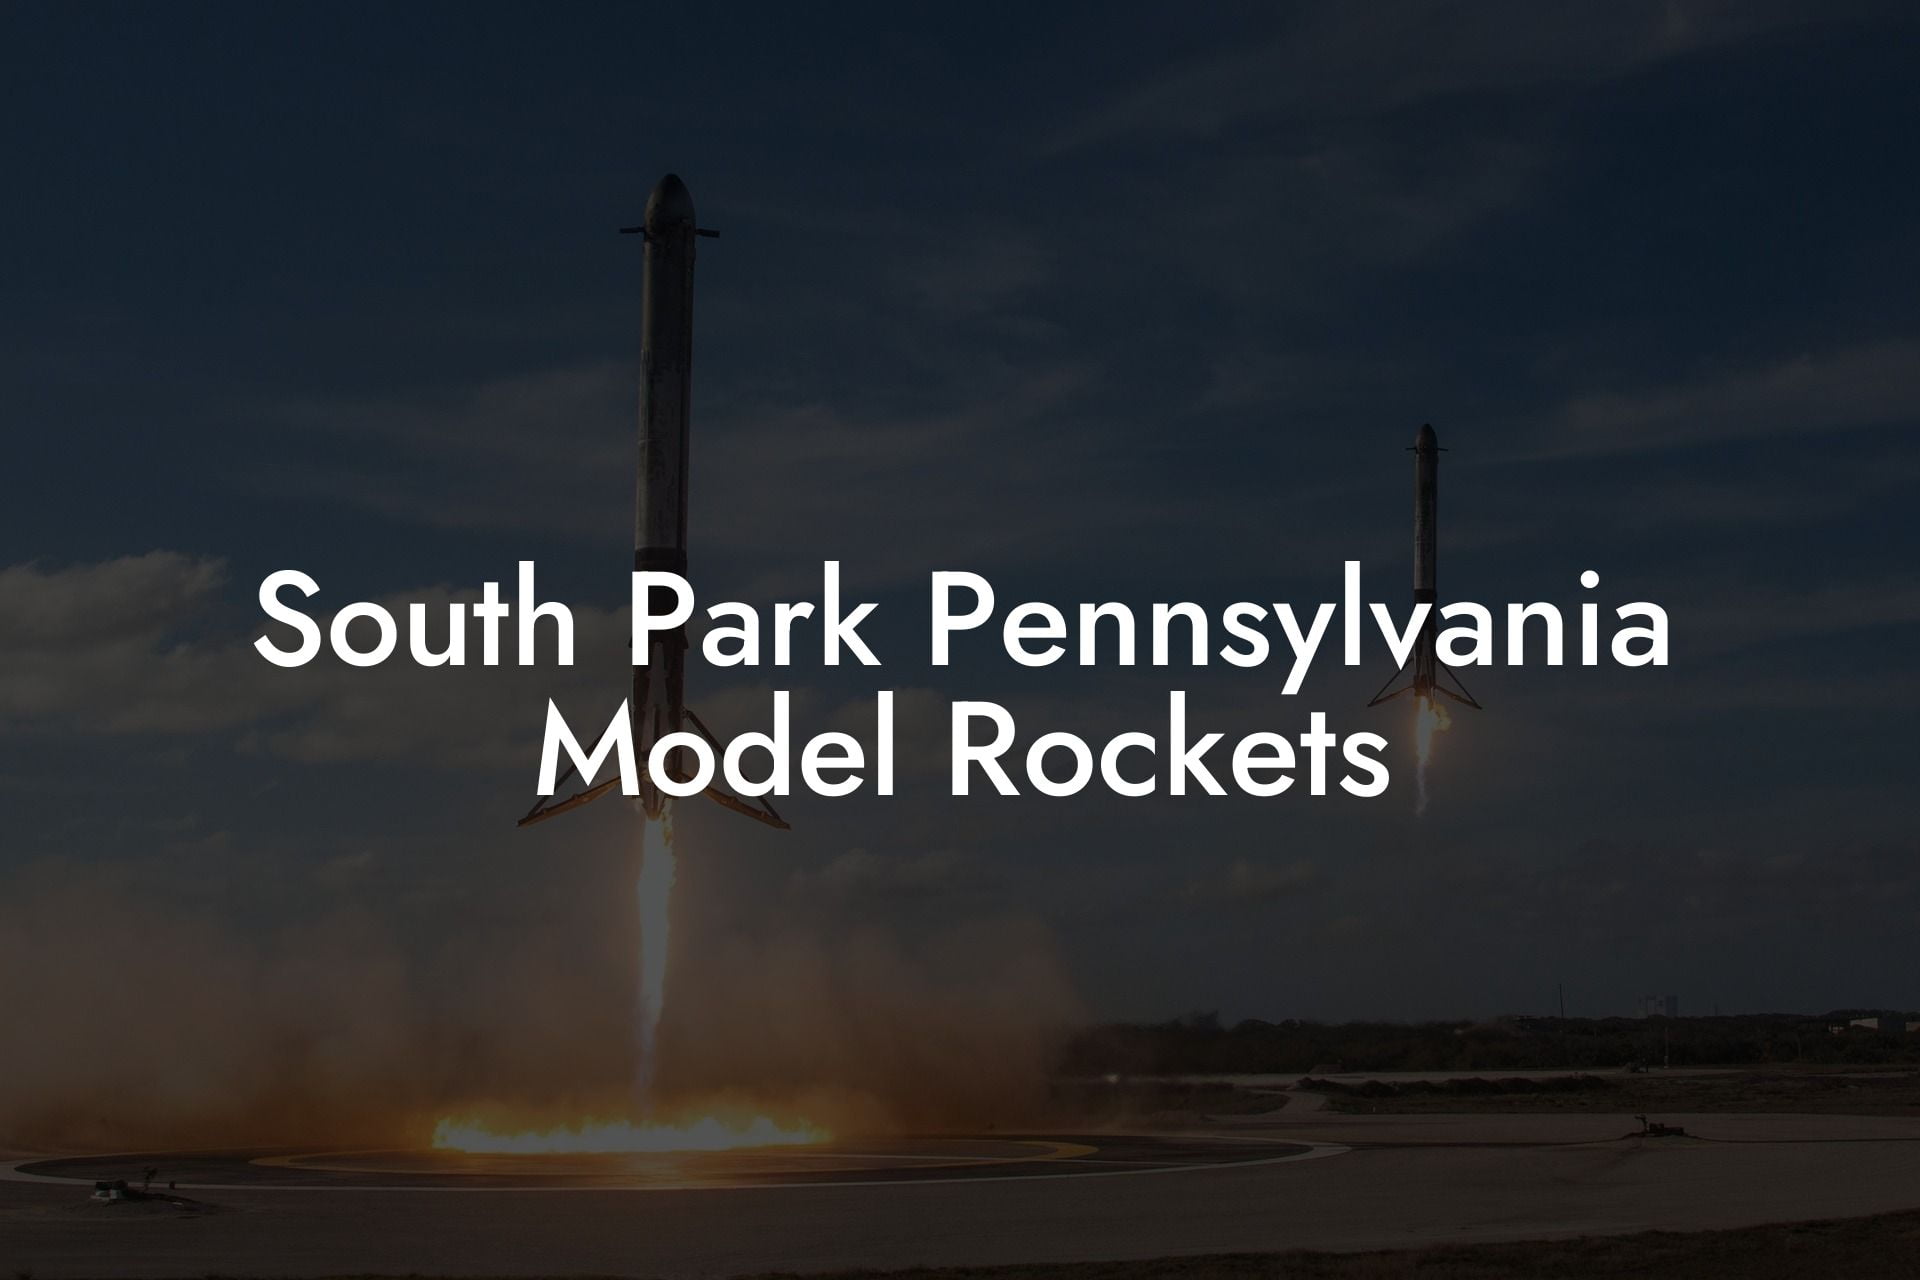 South Park Pennsylvania Model Rockets